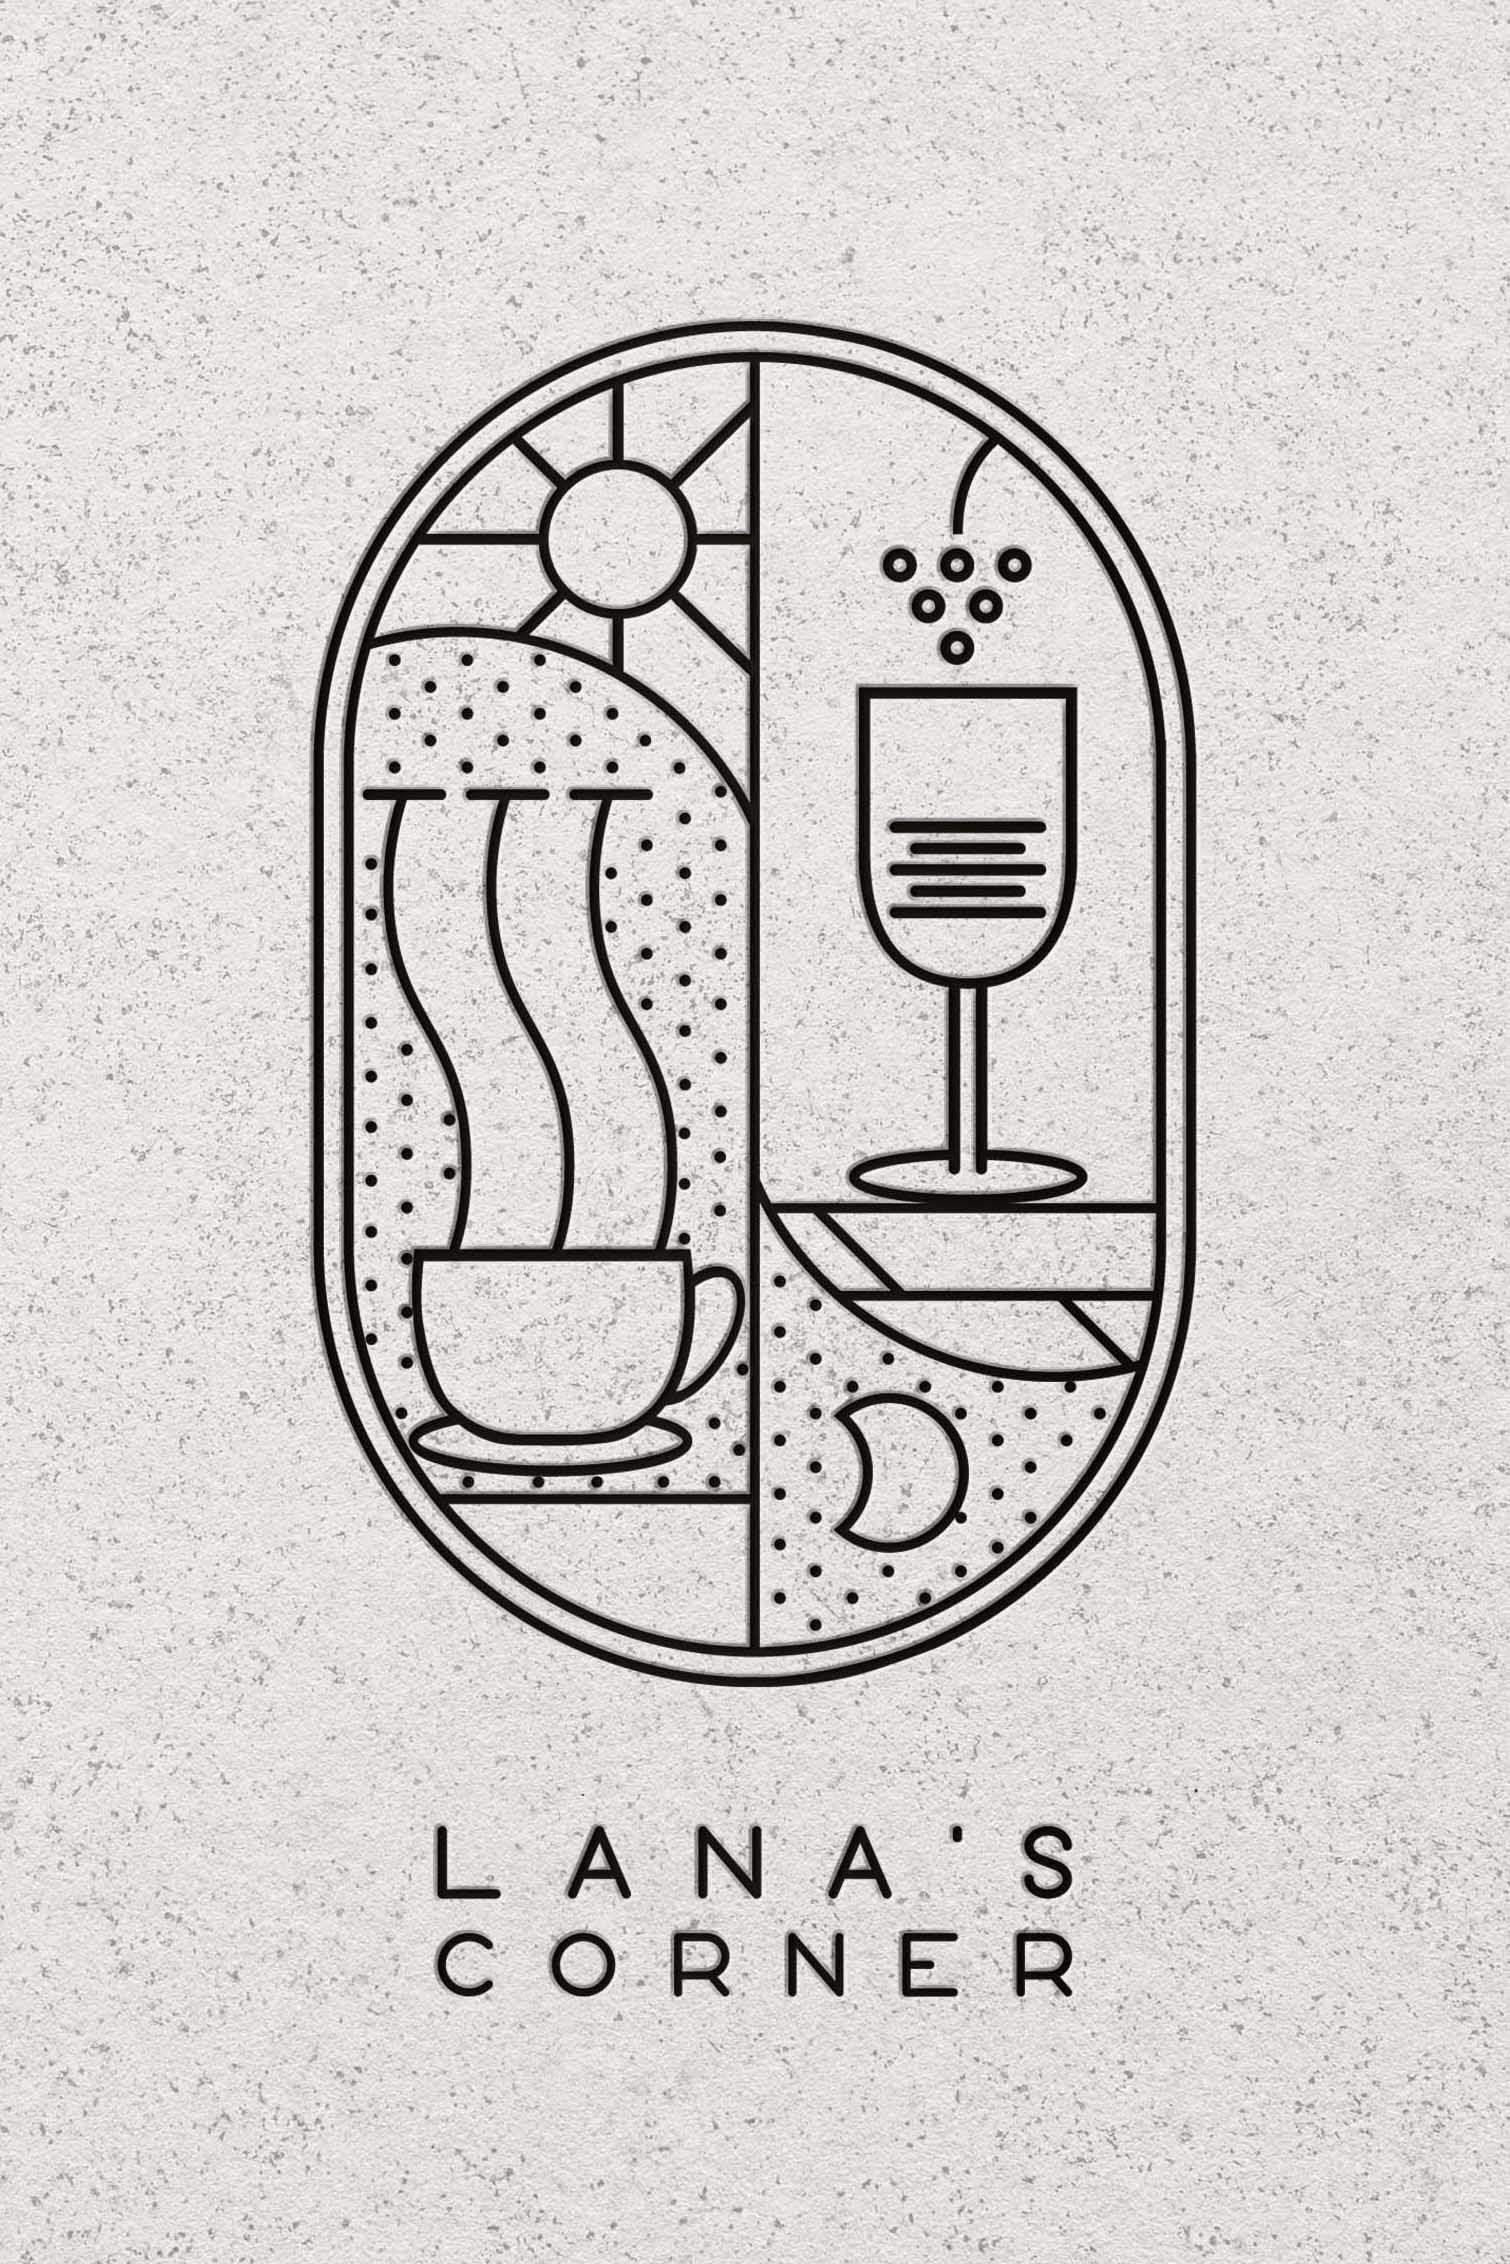 LANA'S CORNER - logotip / Kalifina kreativni studio